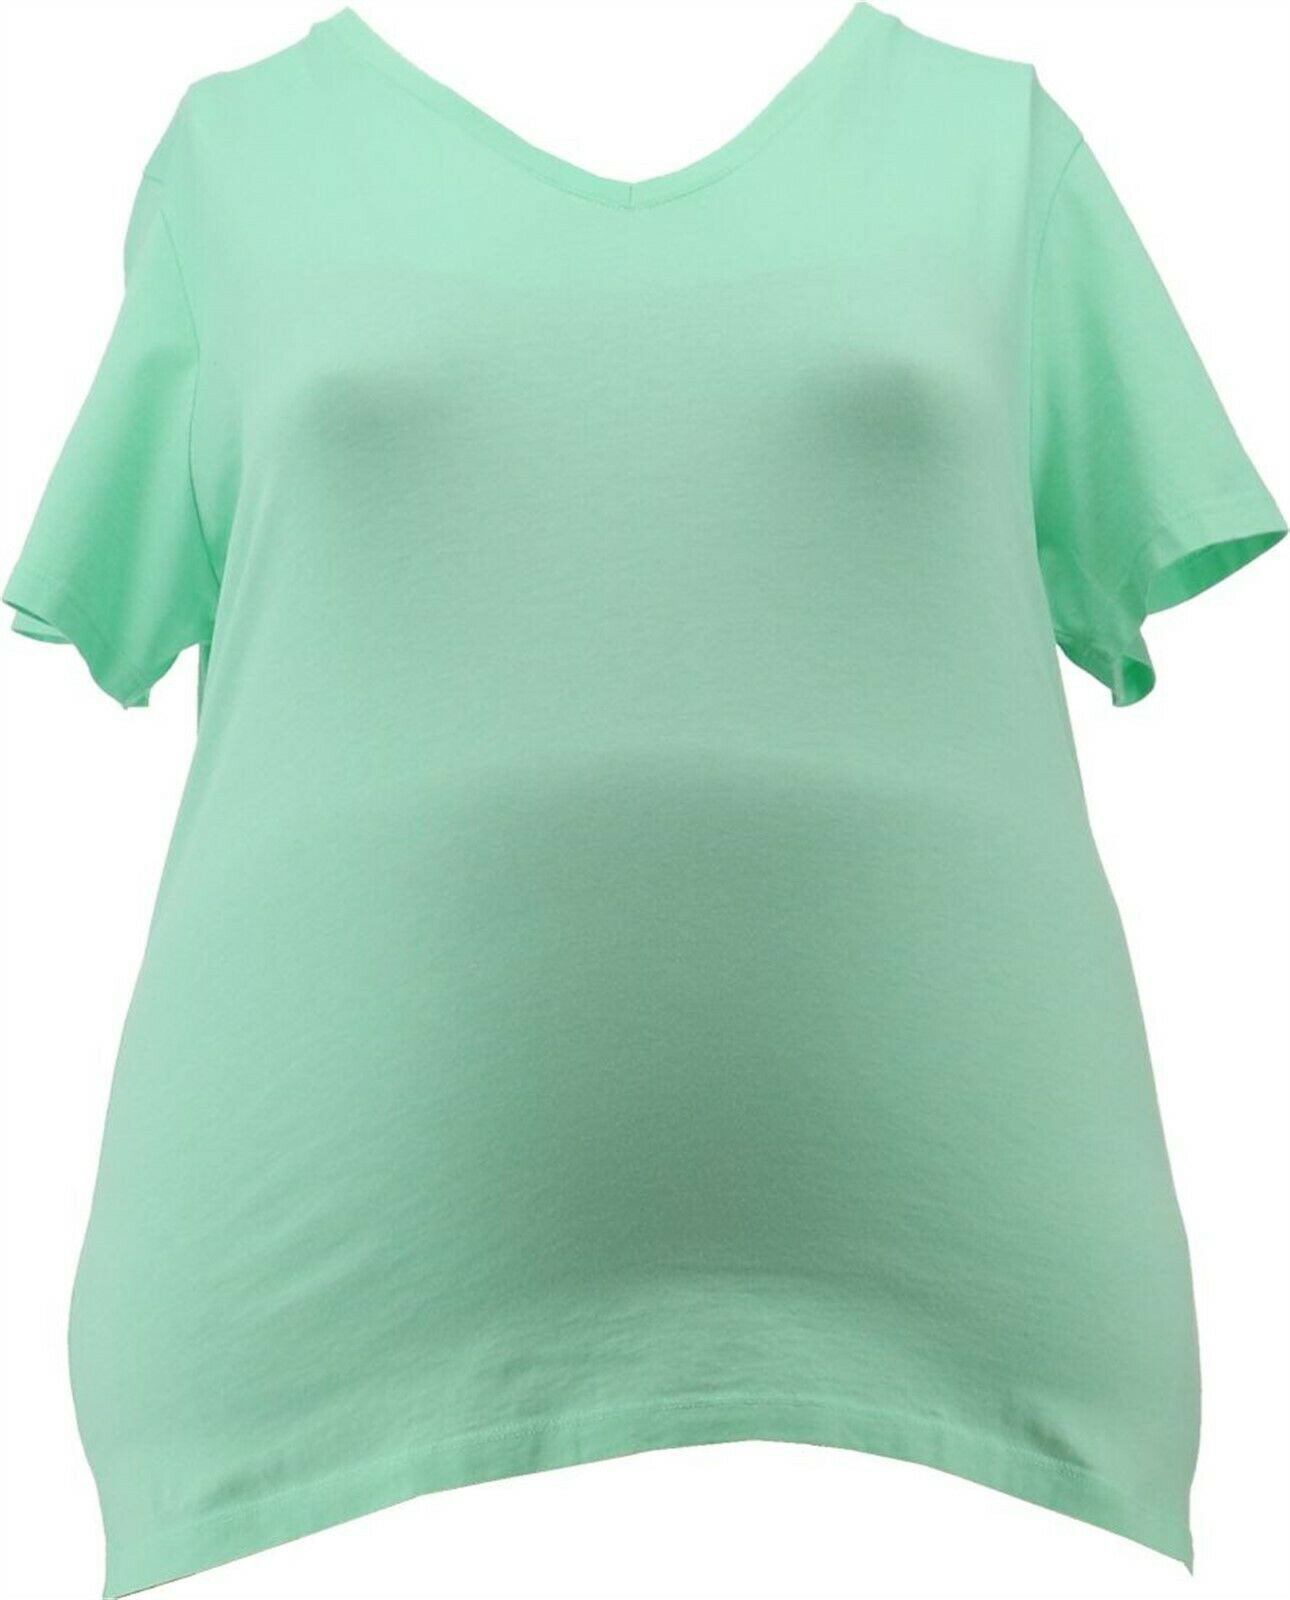 Lands' End Women's Relaxed V-Neck T-Shirt Blue Multi Ombre Stripe M NEW  411453 - Walmart.com